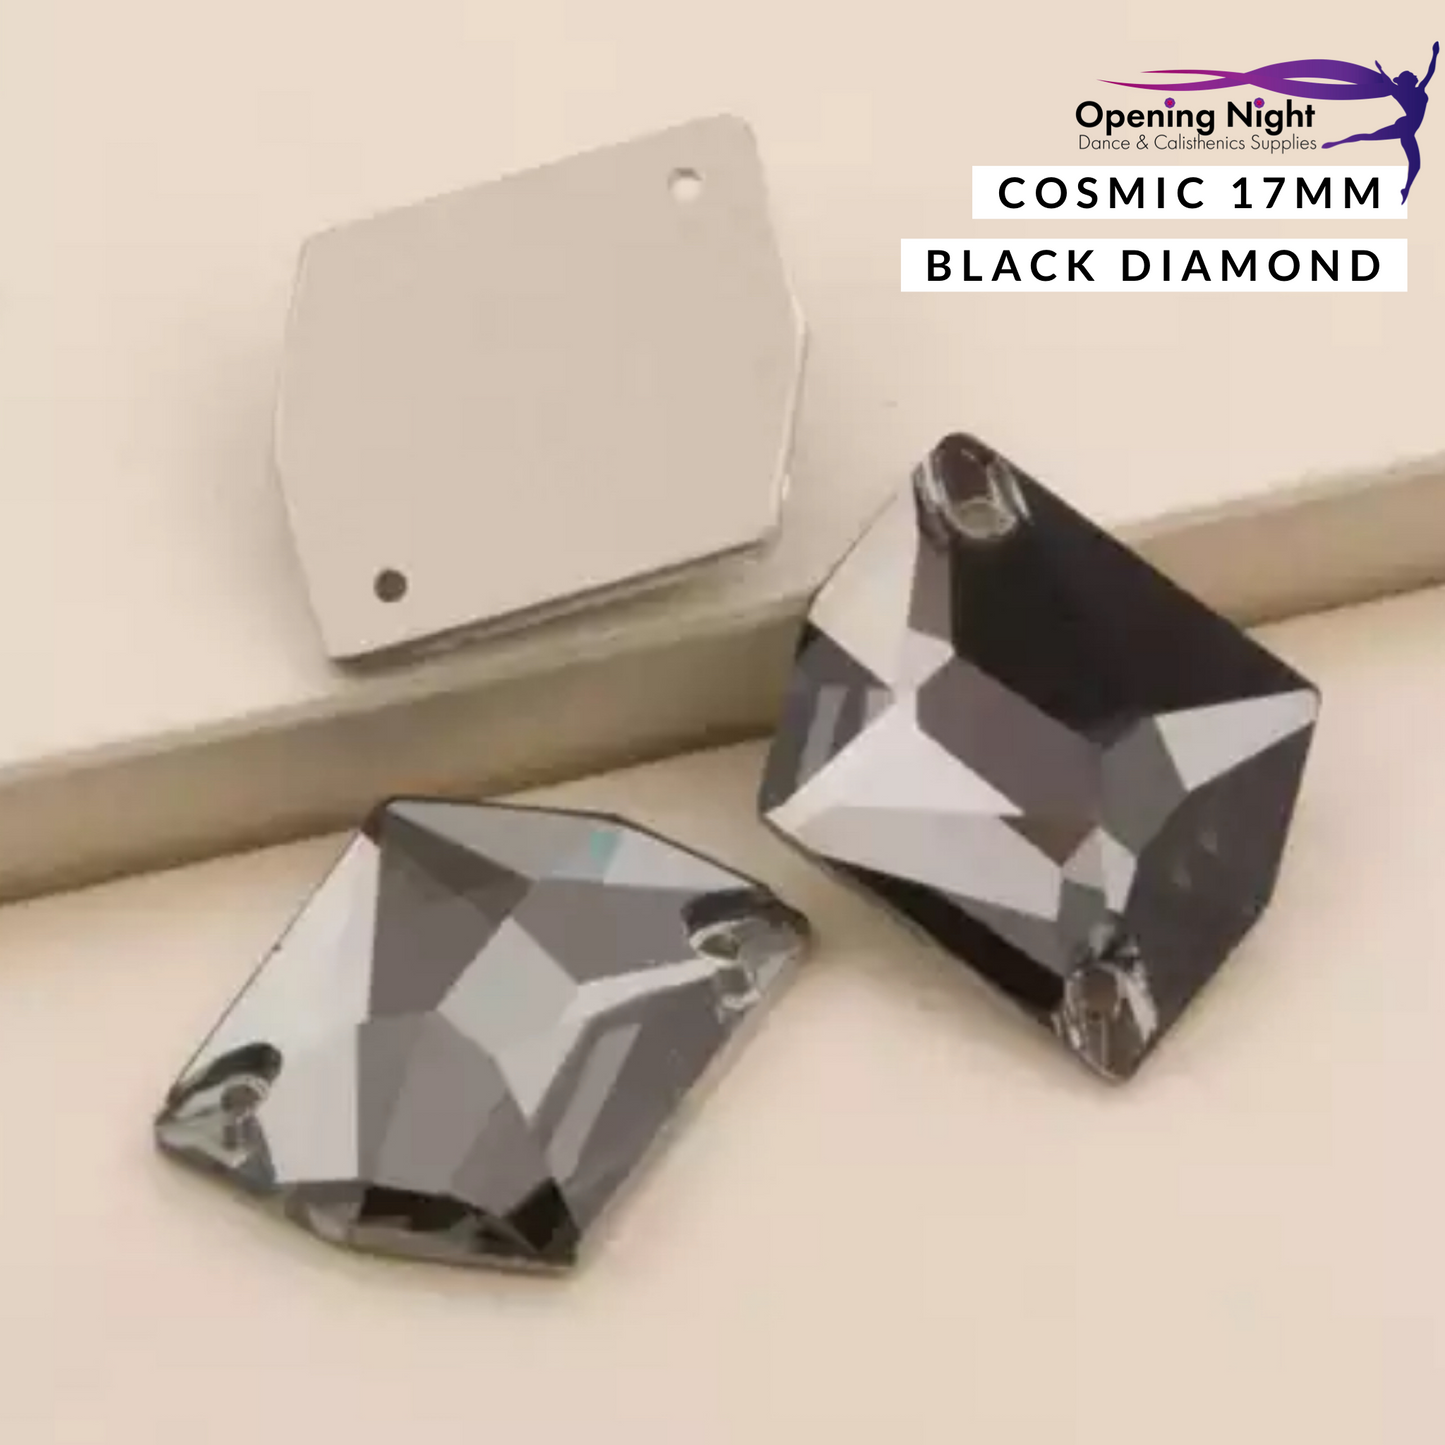 Cosmic 17mm, Black Diamond